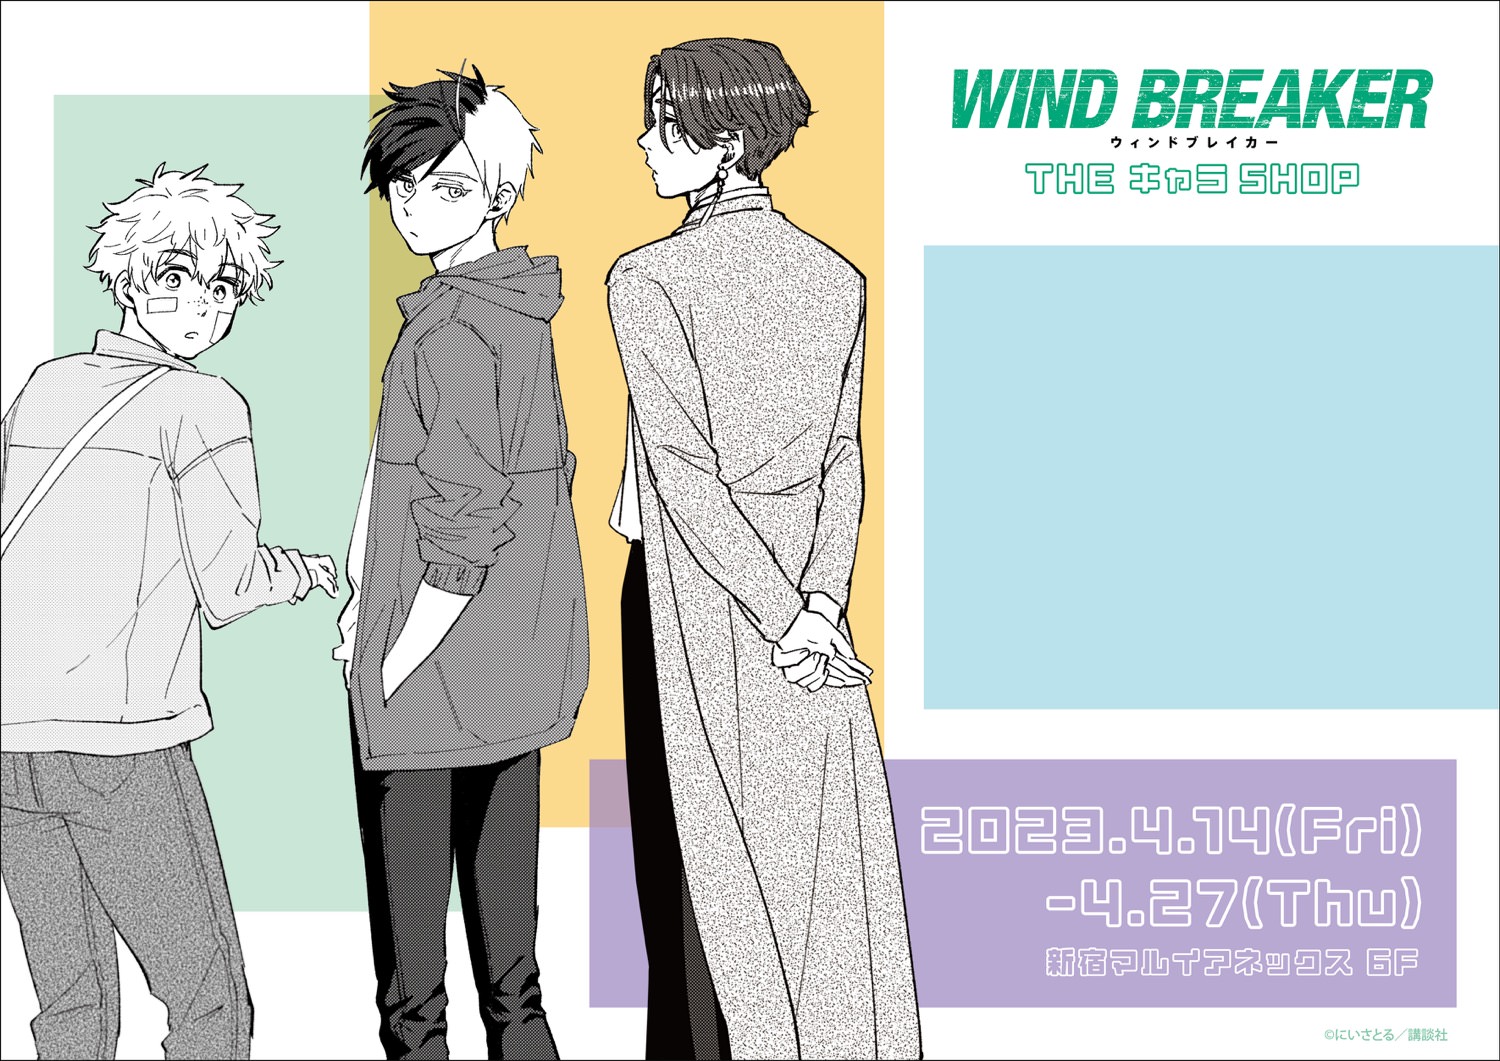 WIND BREAKER ポップアップストア in 新宿 4月14日より開催!